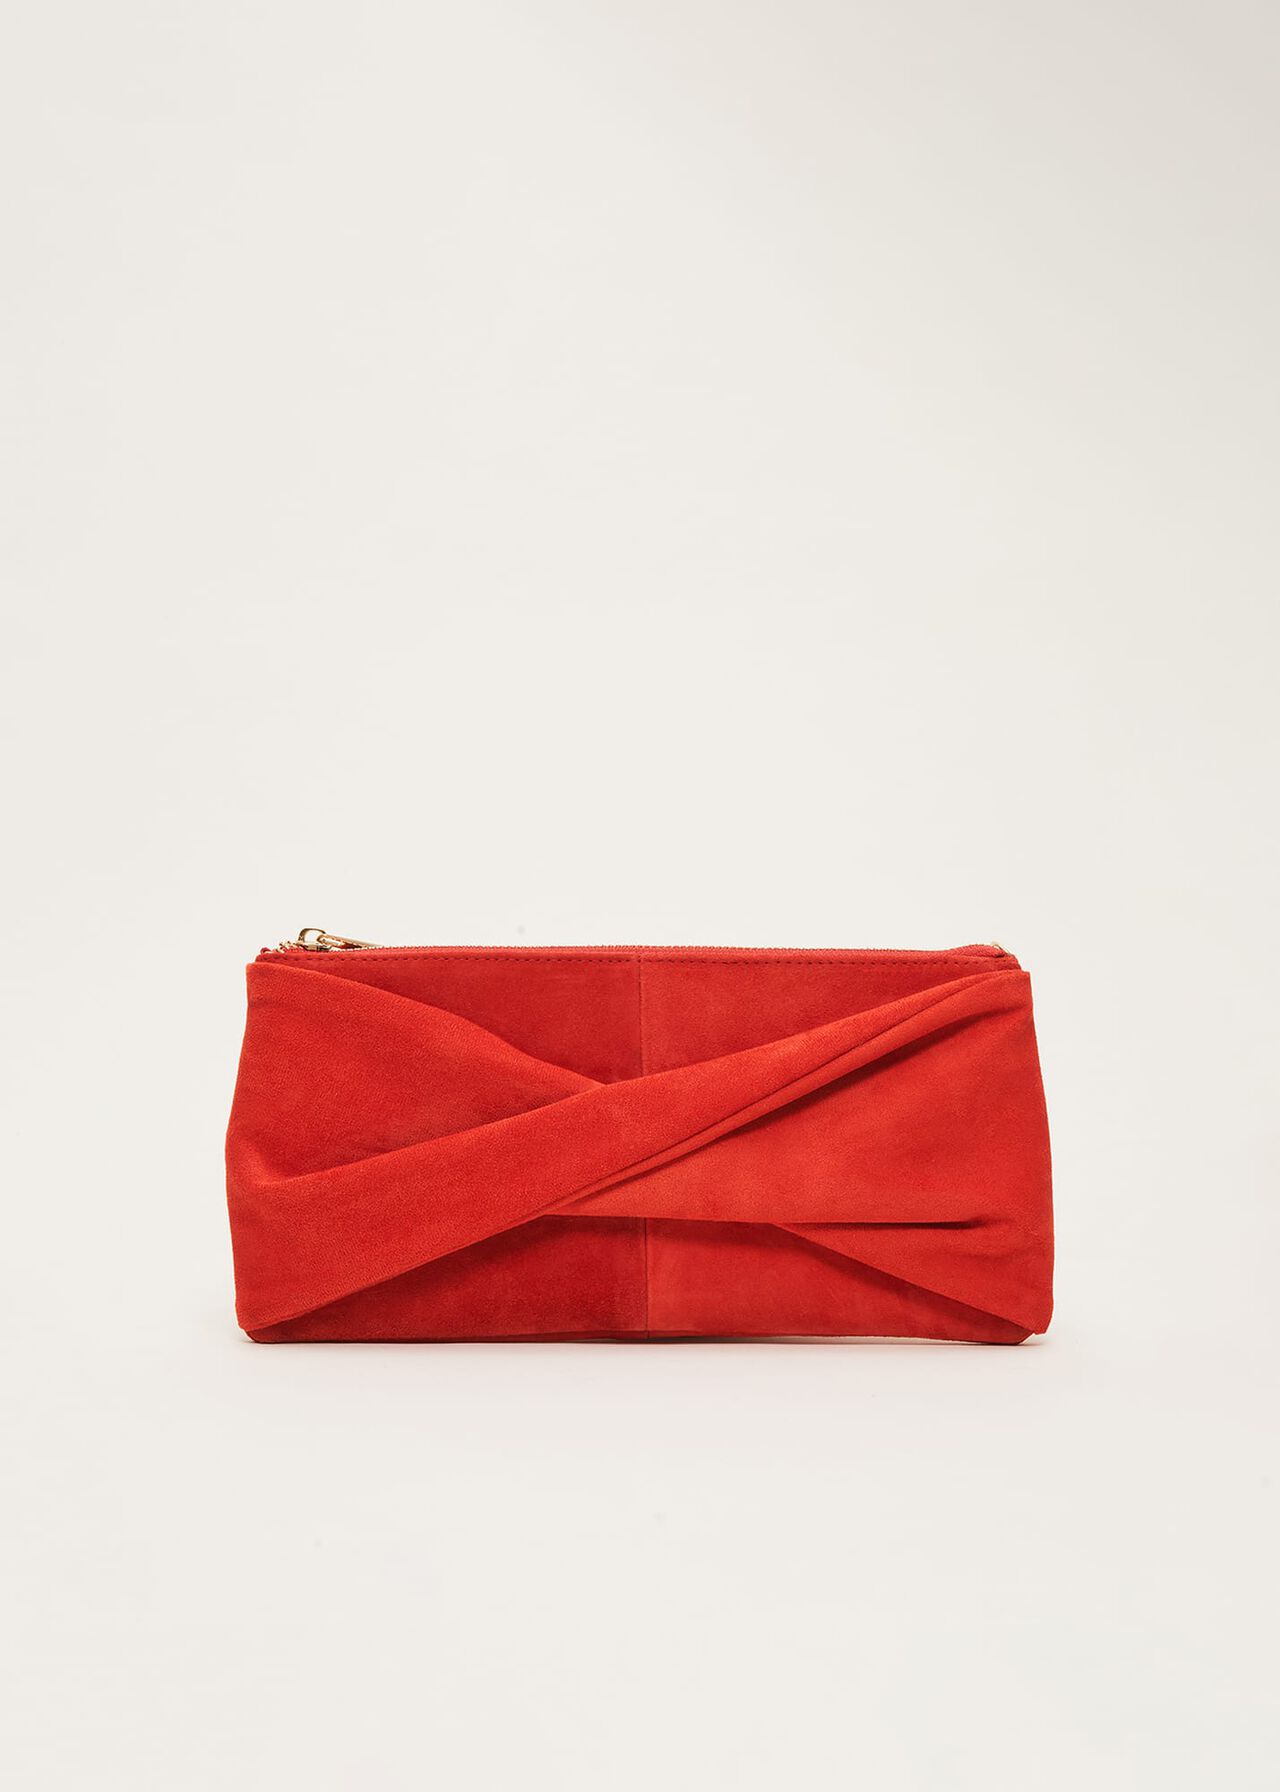 Red Suede Clutch Bag